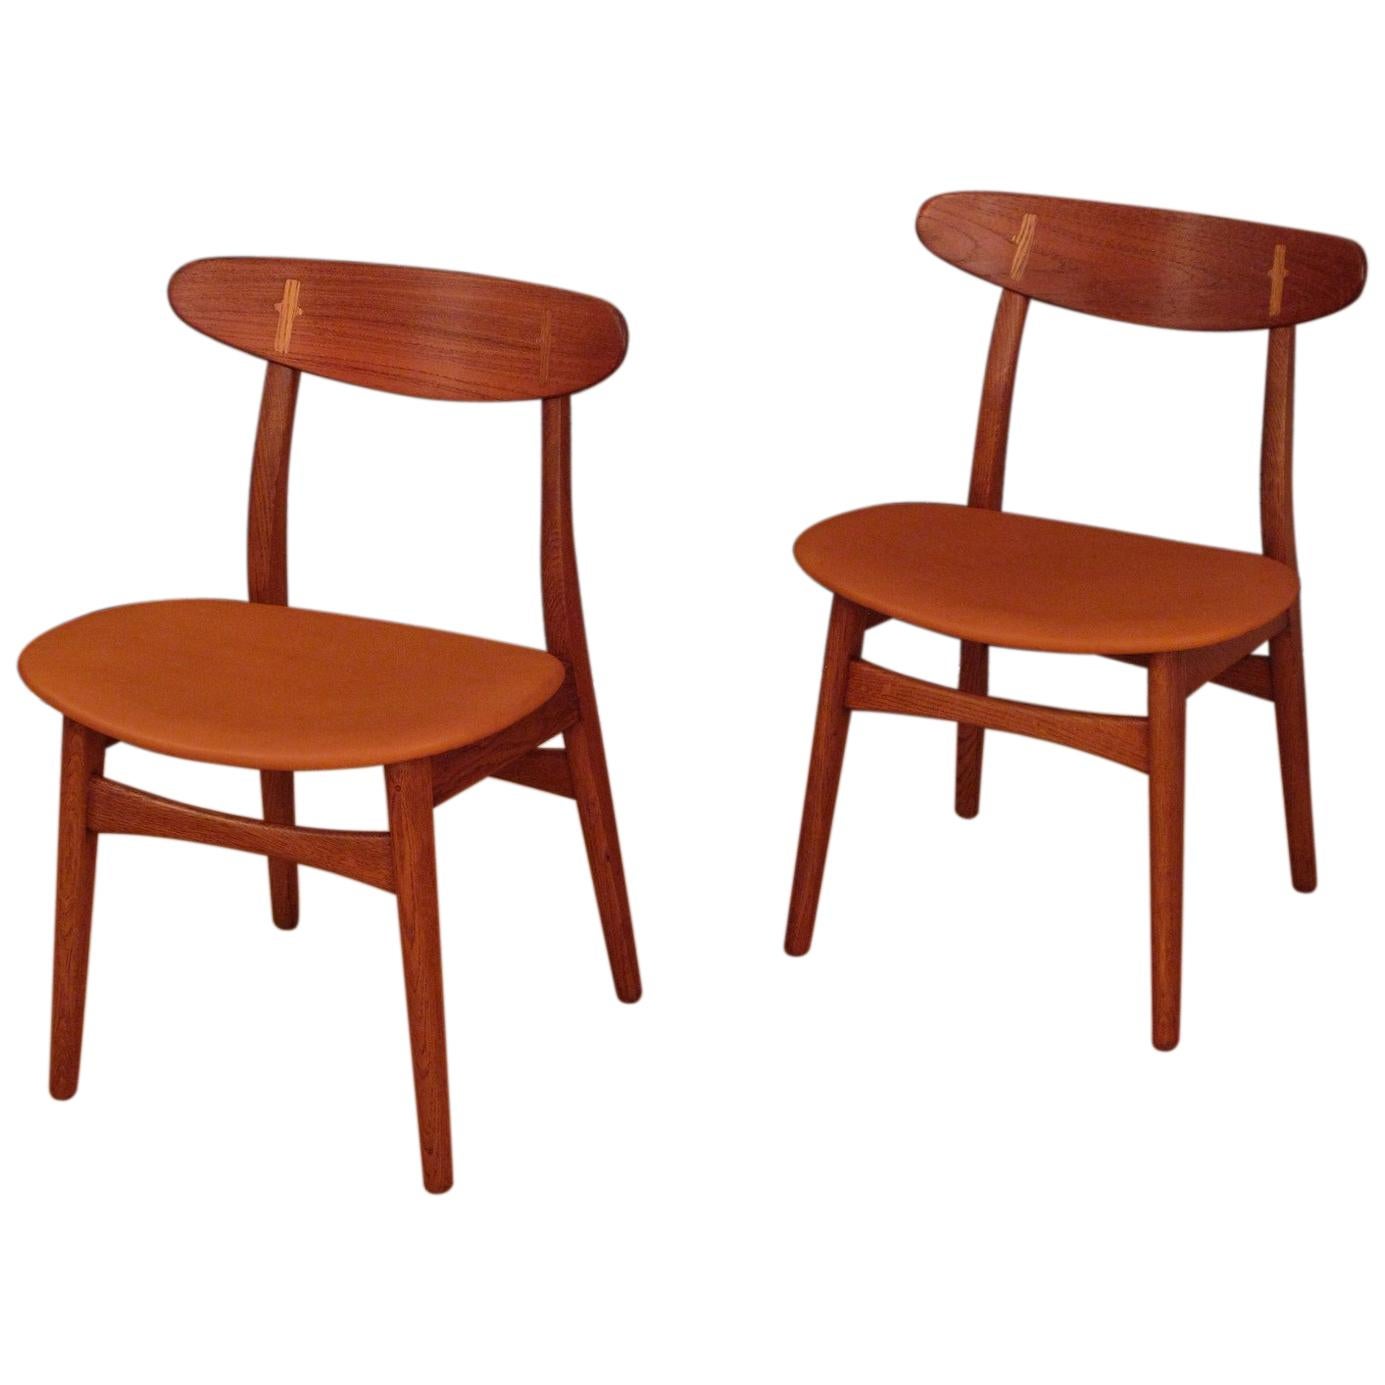 Pair of Hans Wegner CH30 Oak, Teak and Leather Chairs for Carl Hansen & Son